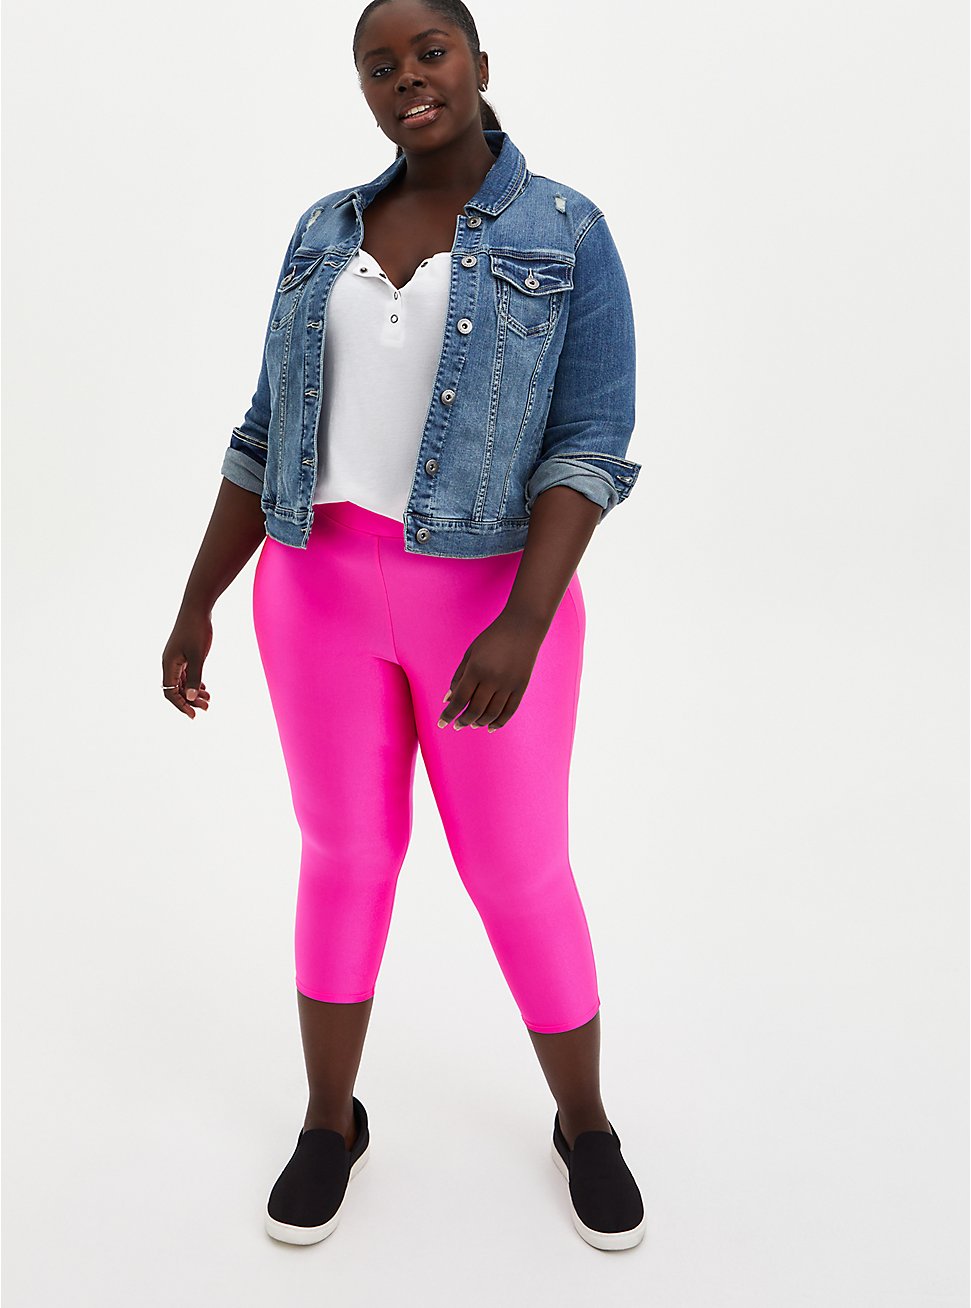 neon pink leggings plus size